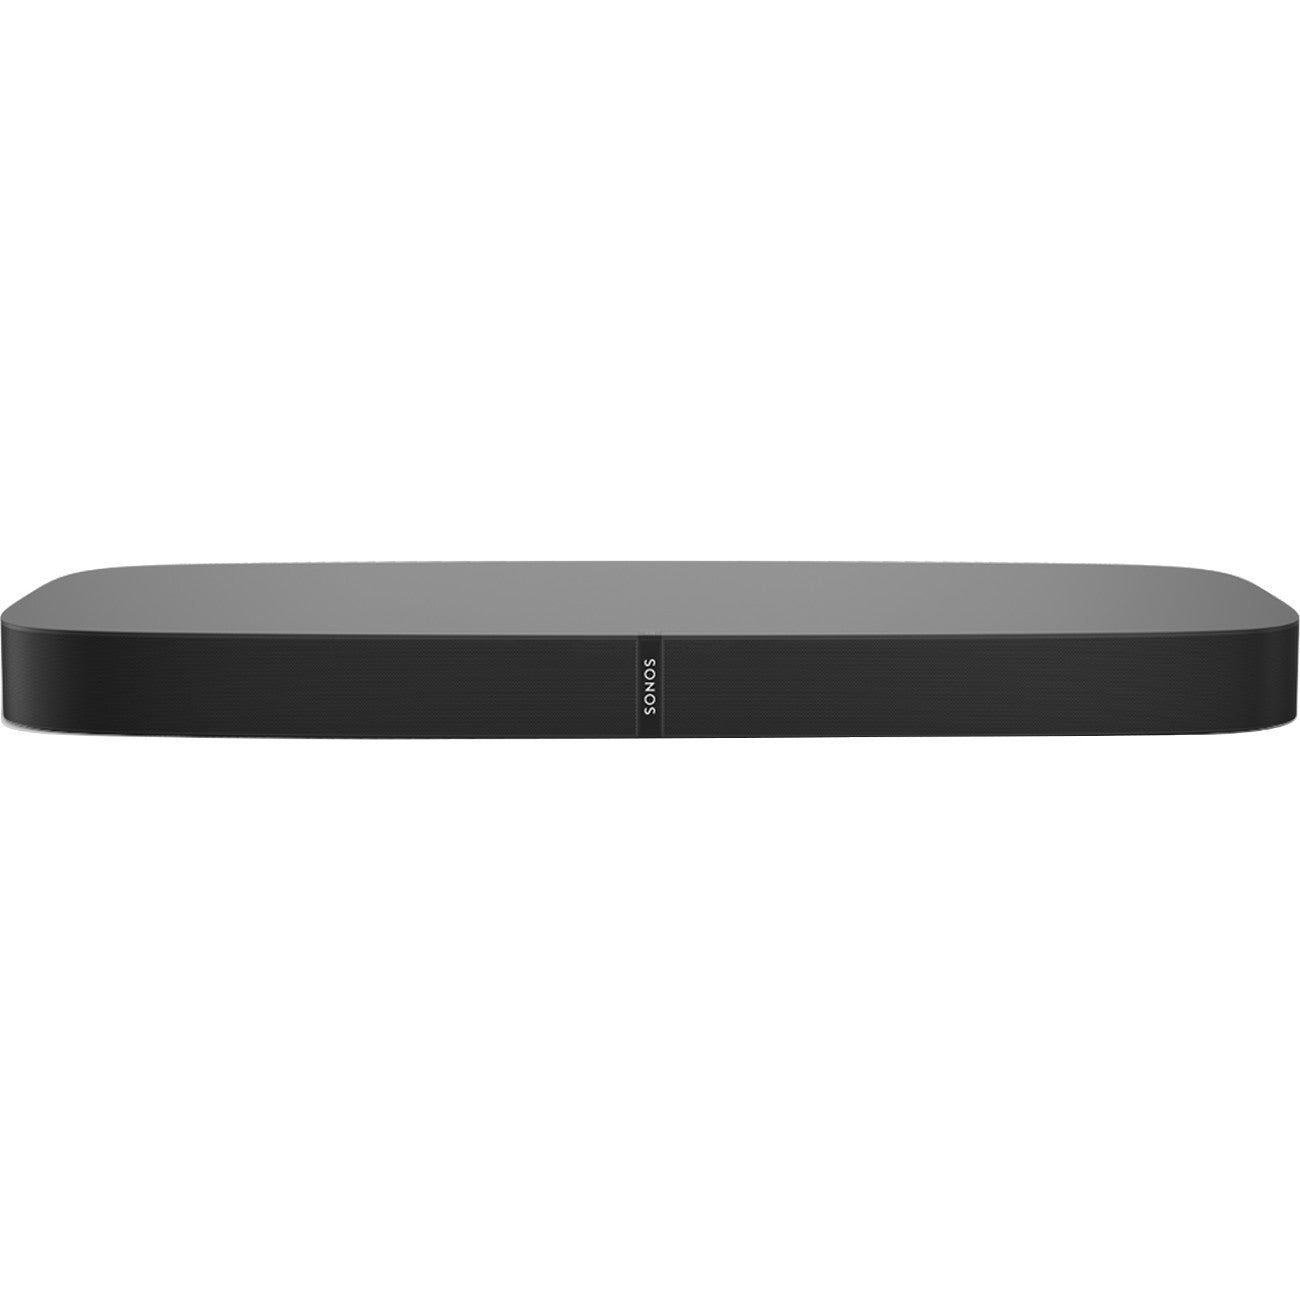 Sonos Playbase (Black) - Front View